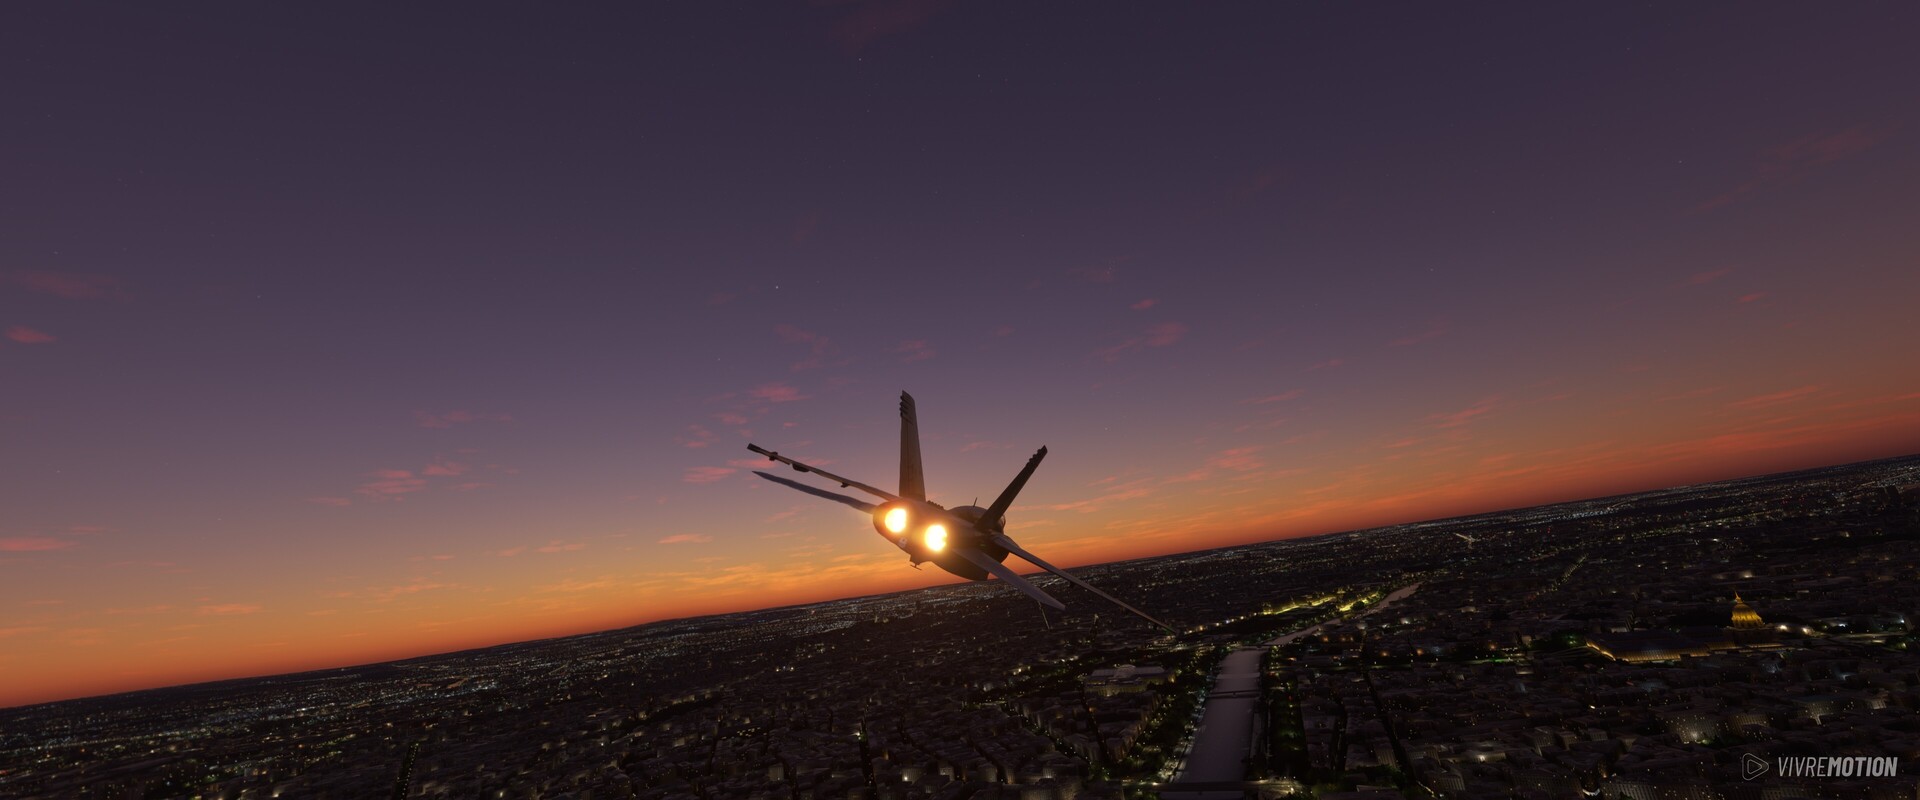 Paris Night - Boeing F/A-18 Super Hornet - Microsoft Flight Simulator - VIVRE-MOTION